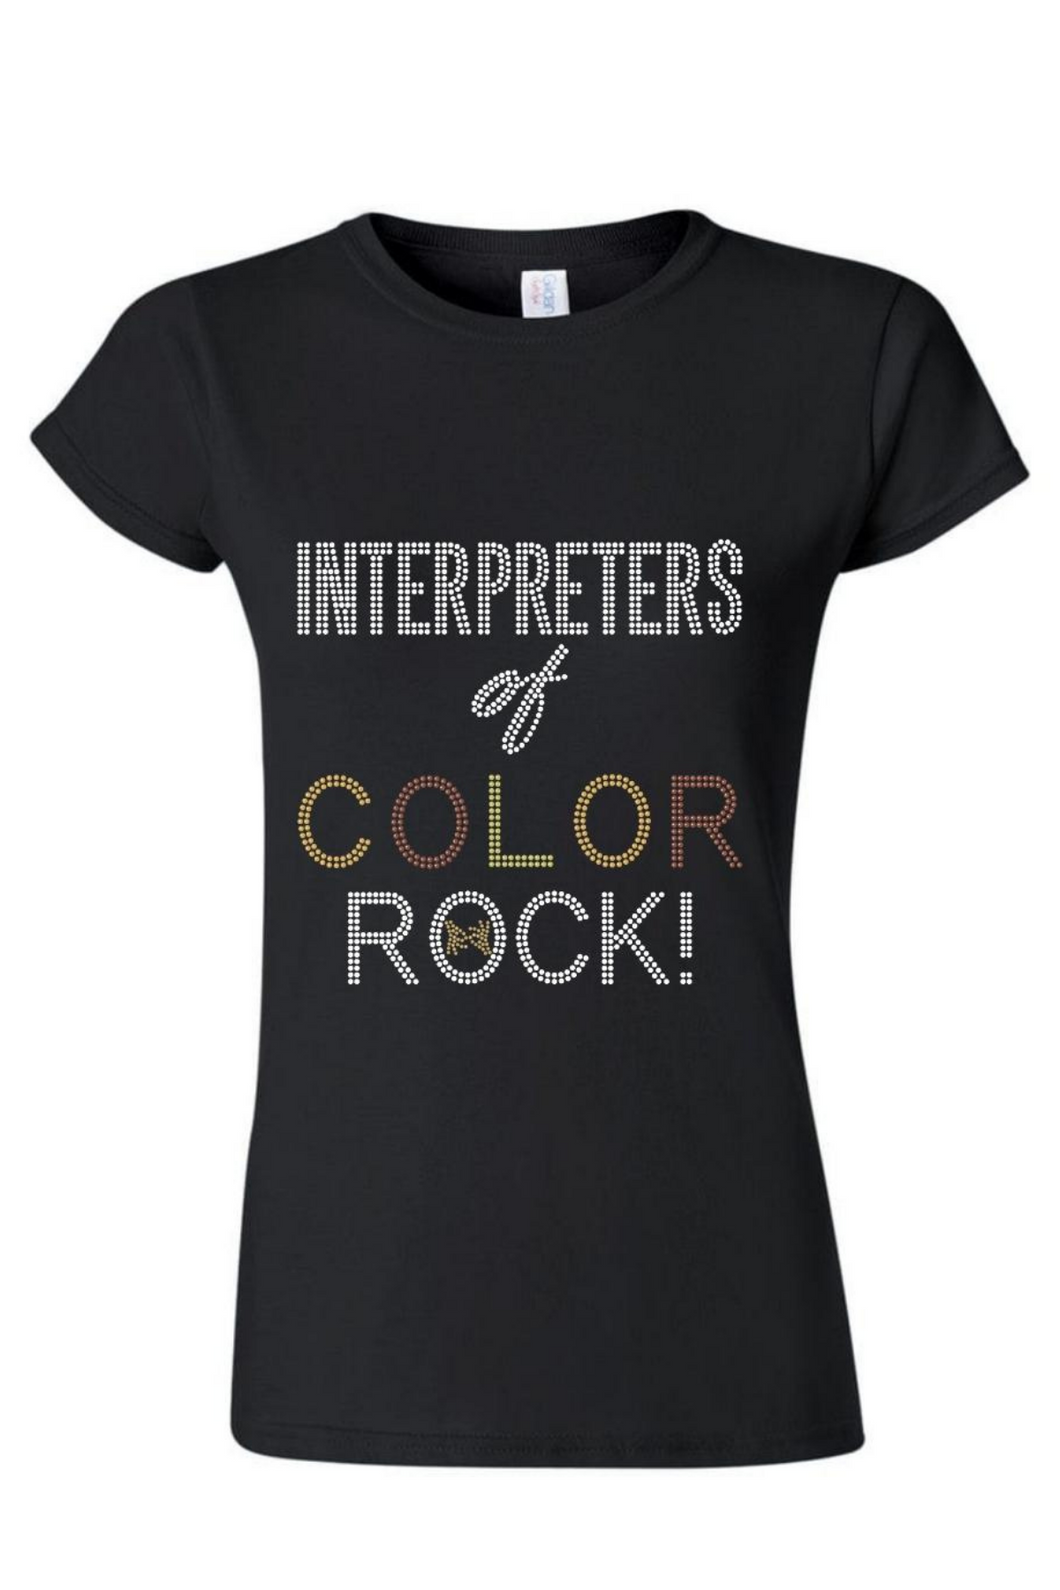 Interpreters of Color Bling